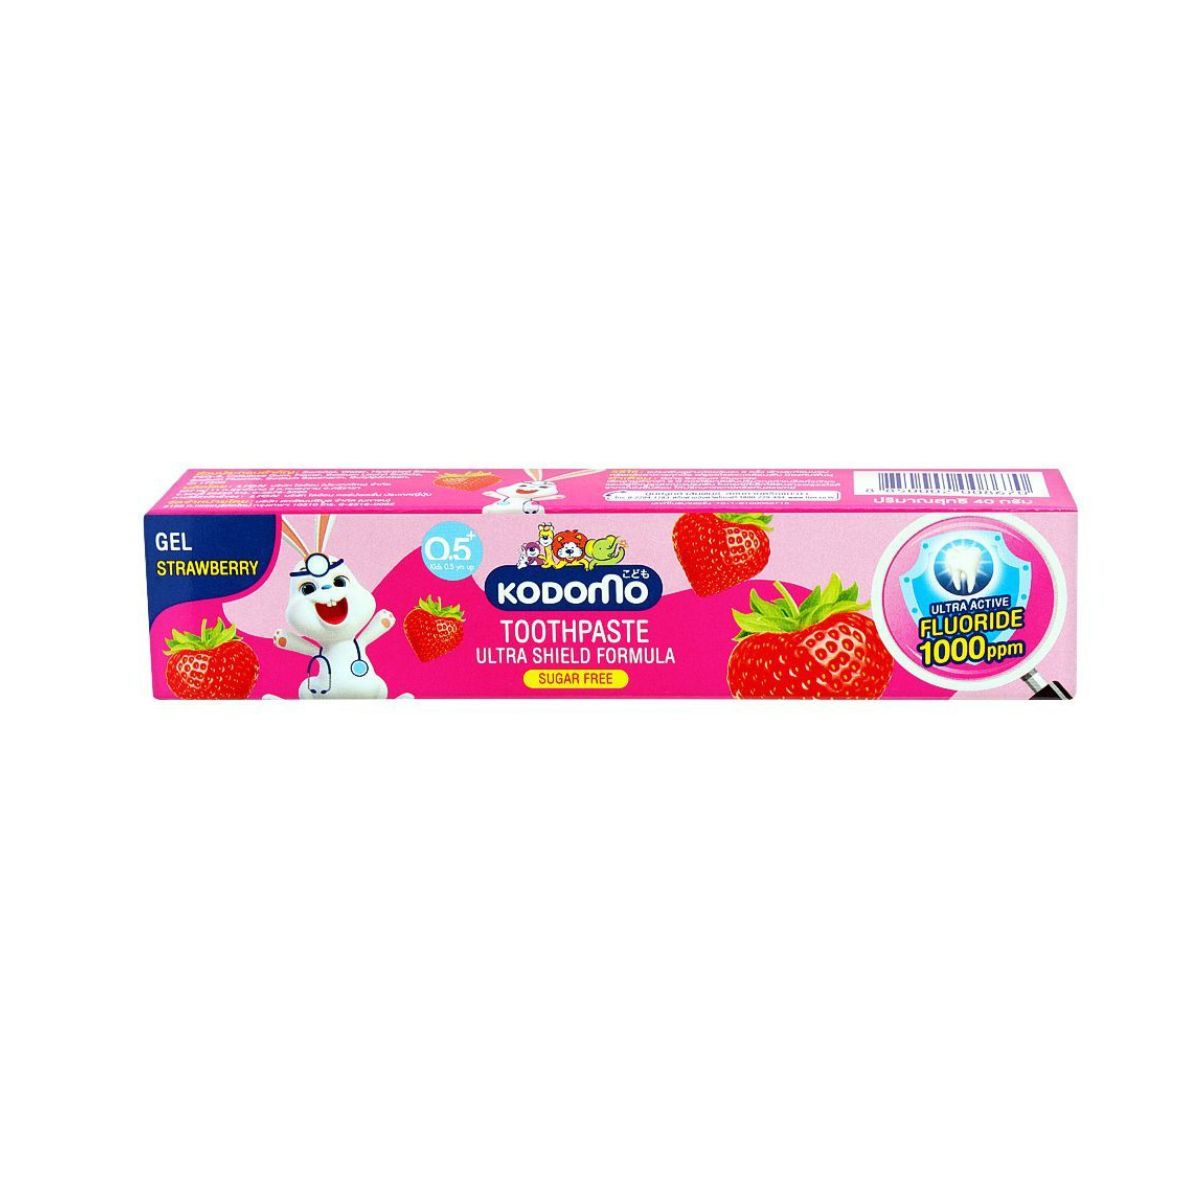 Kodomo Toothpaste Ultra Shield Formula - Sugar Free - Gel Strawberry